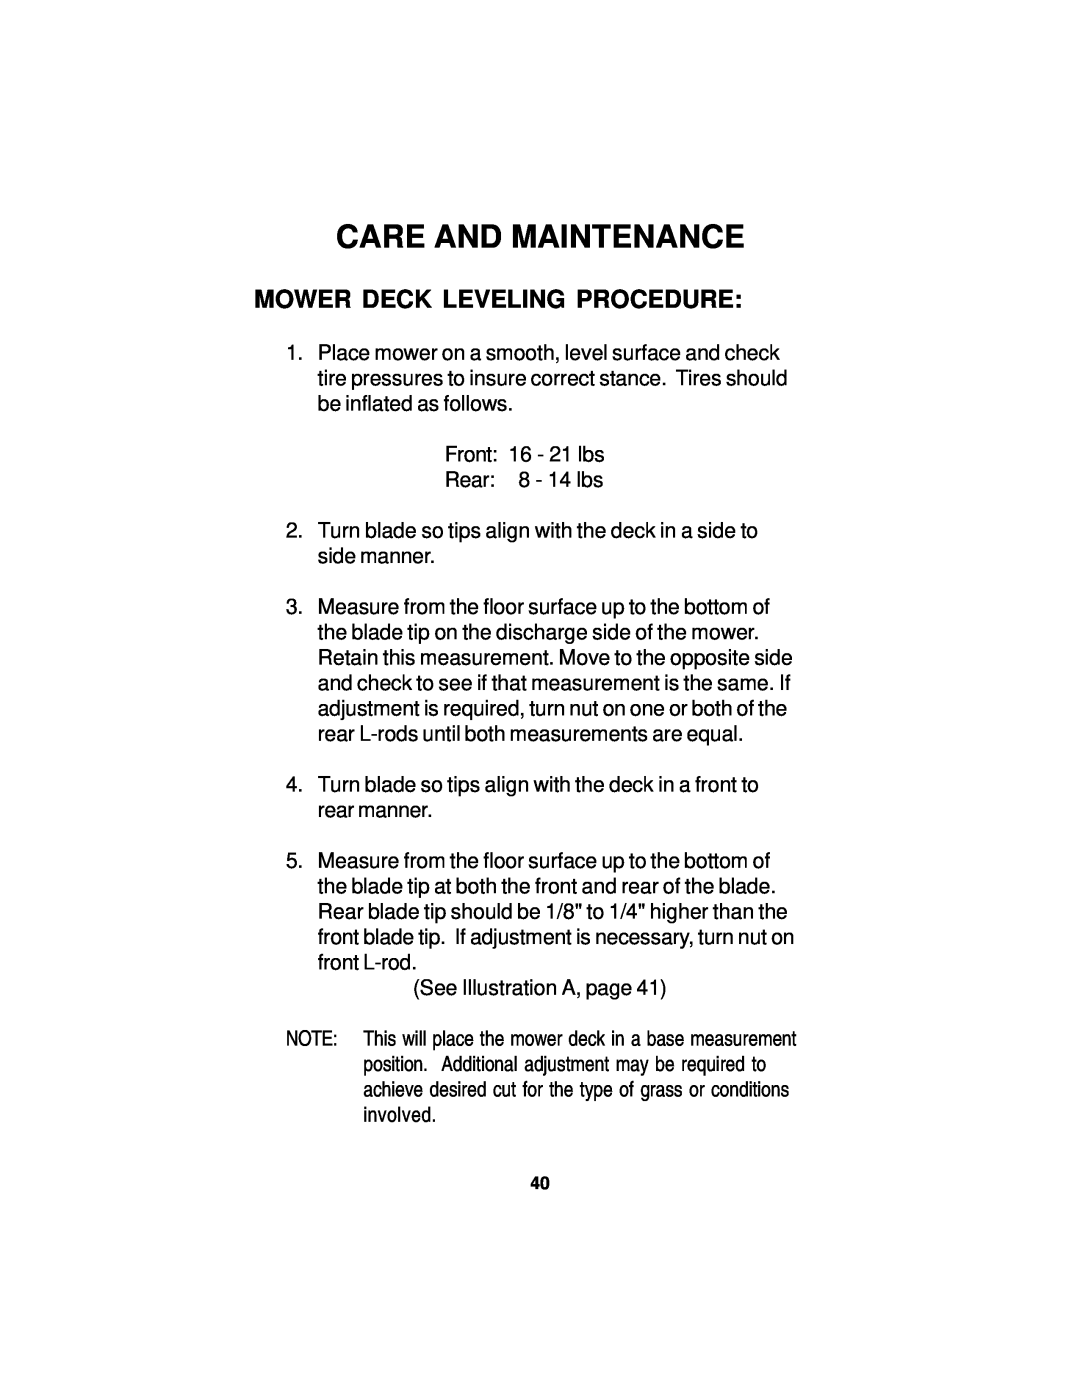 Dixon 14295-0804 manual Mower Deck Leveling Procedure, Care And Maintenance 